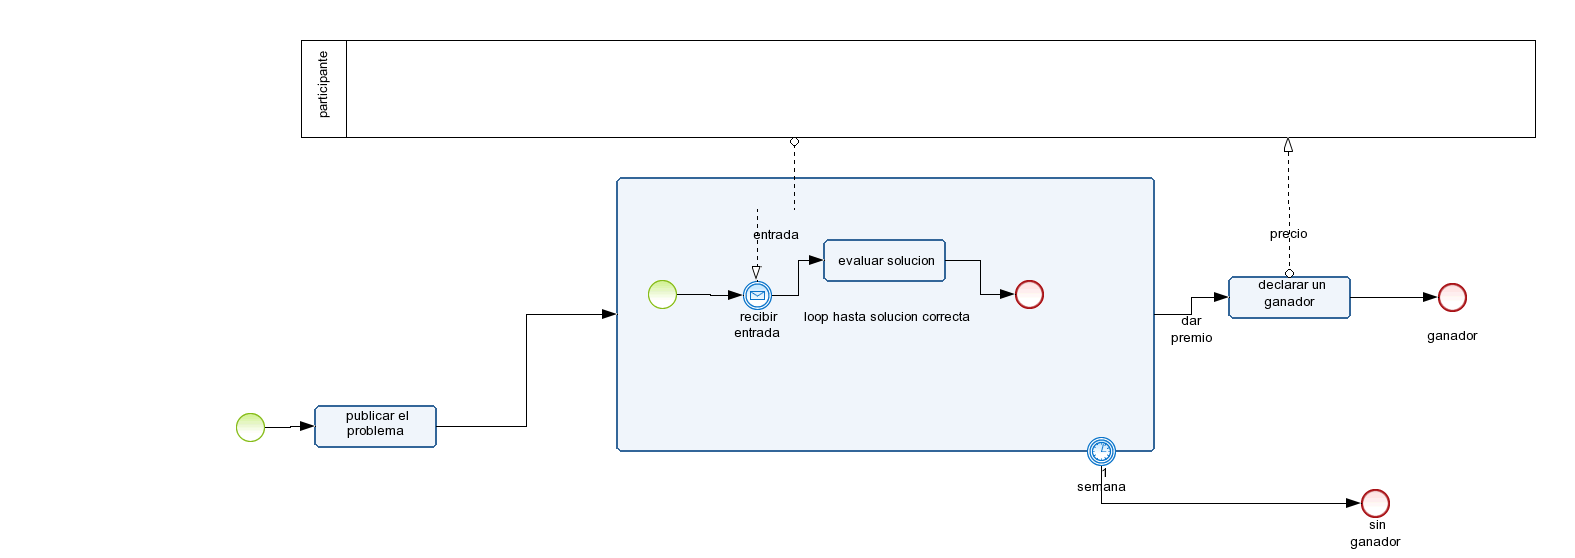 7-1_ok Diagram # 1